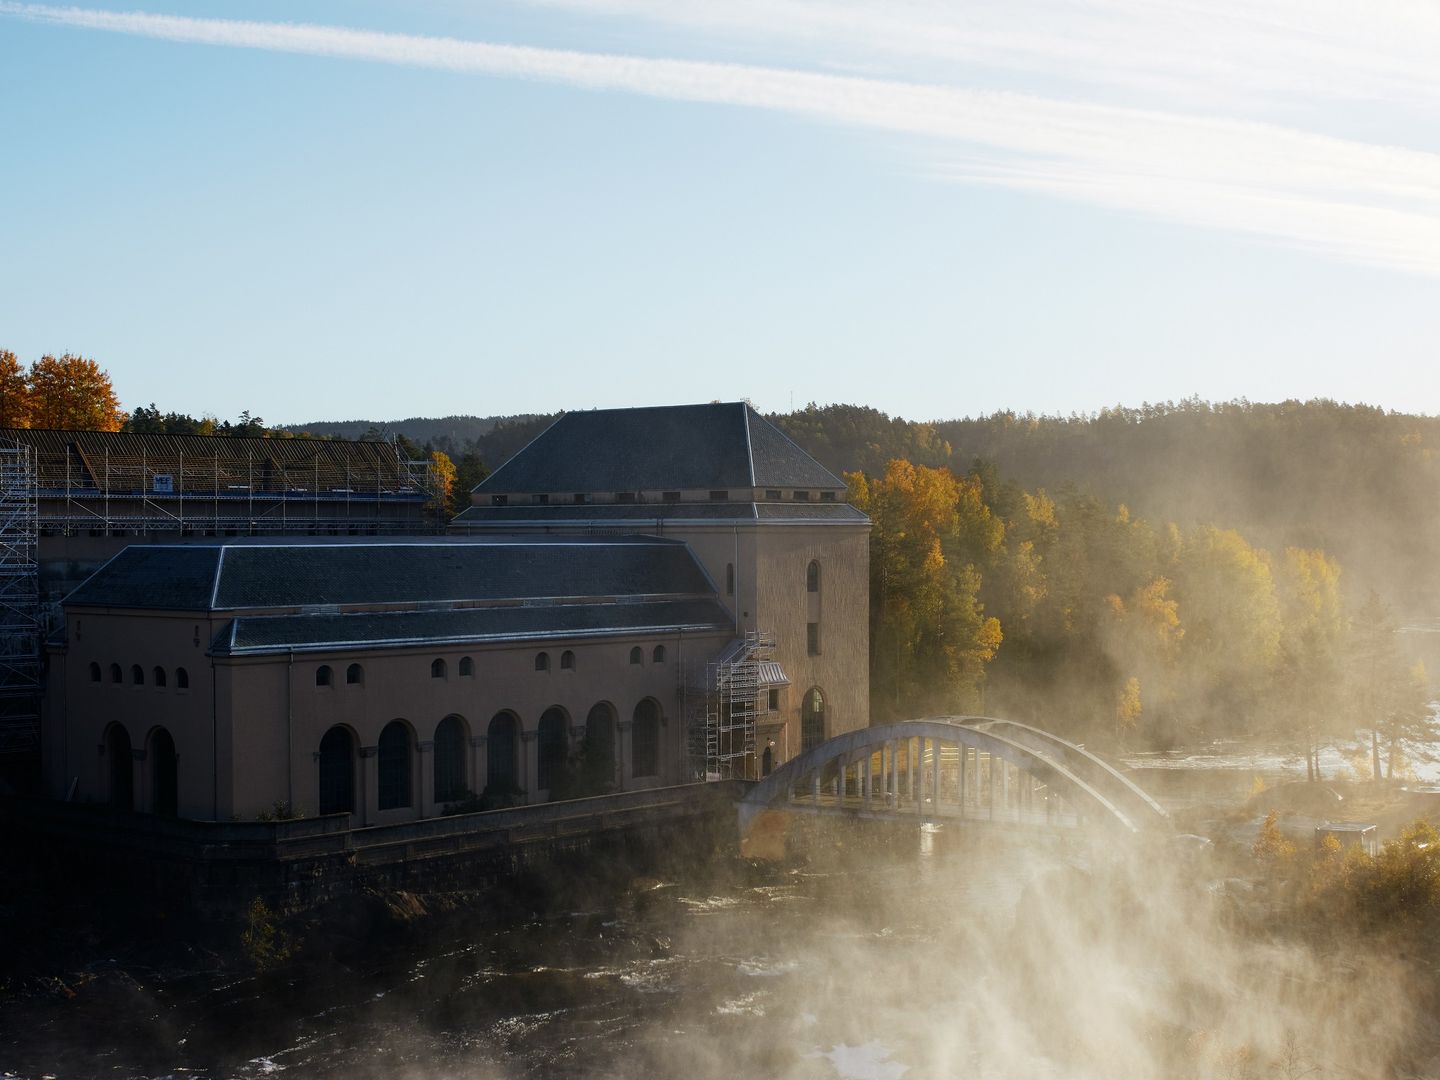 Nomeland kraftverk i Iveland kommune